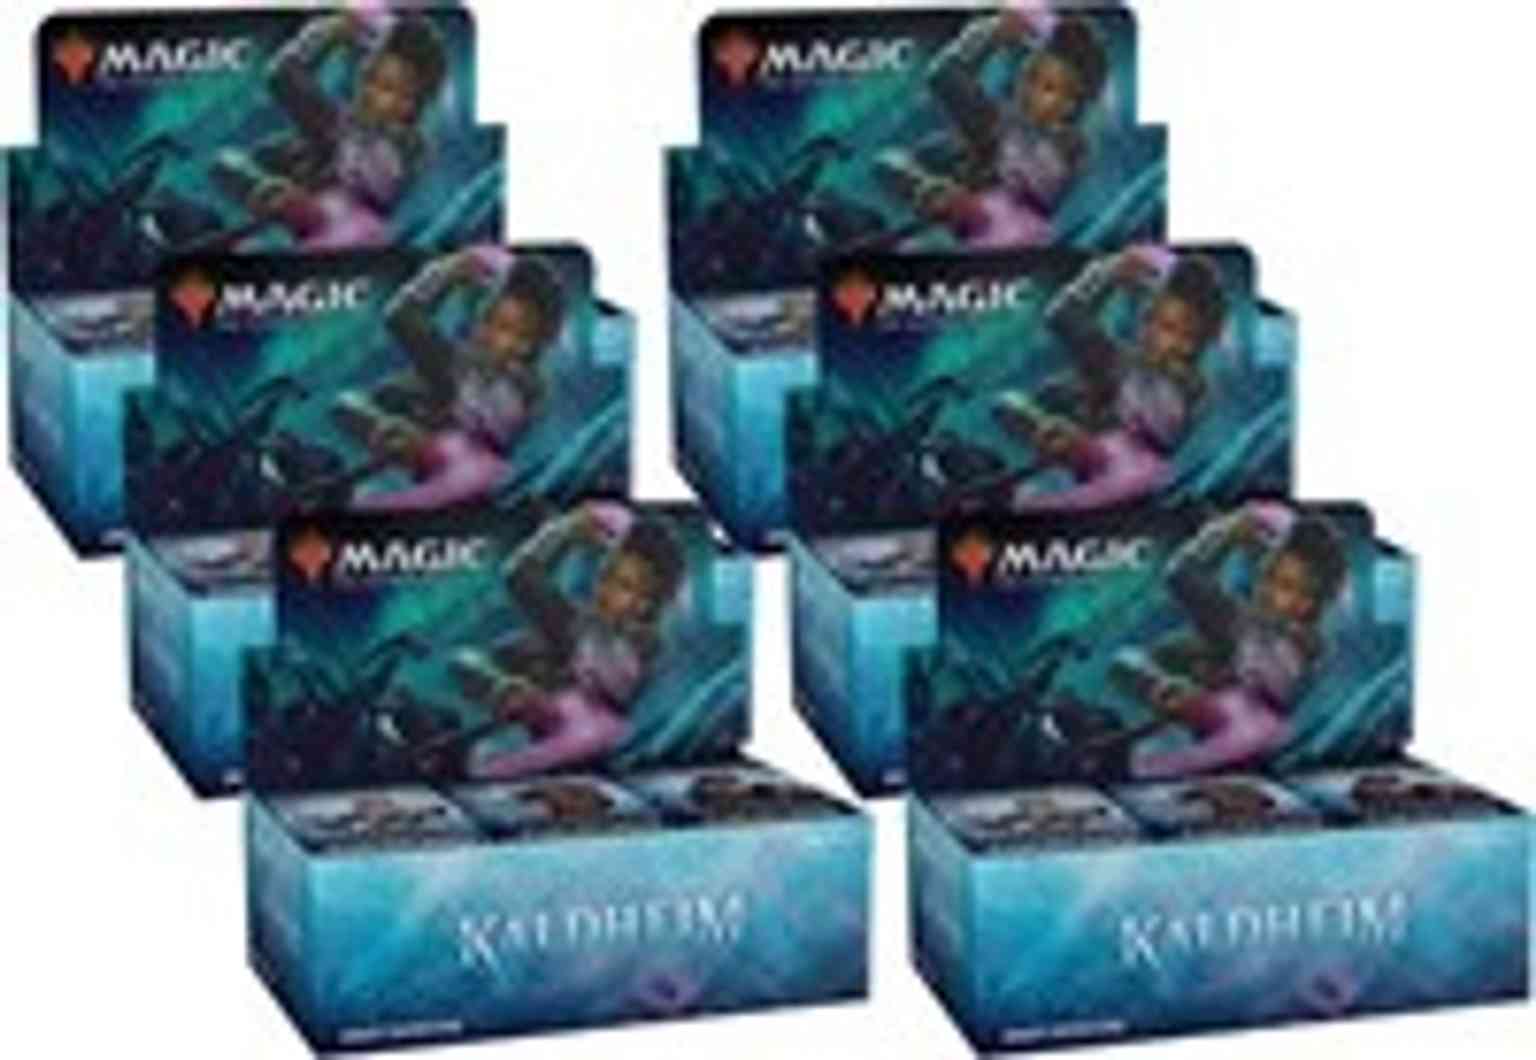 Kaldheim - Draft Booster Box Case magic card front